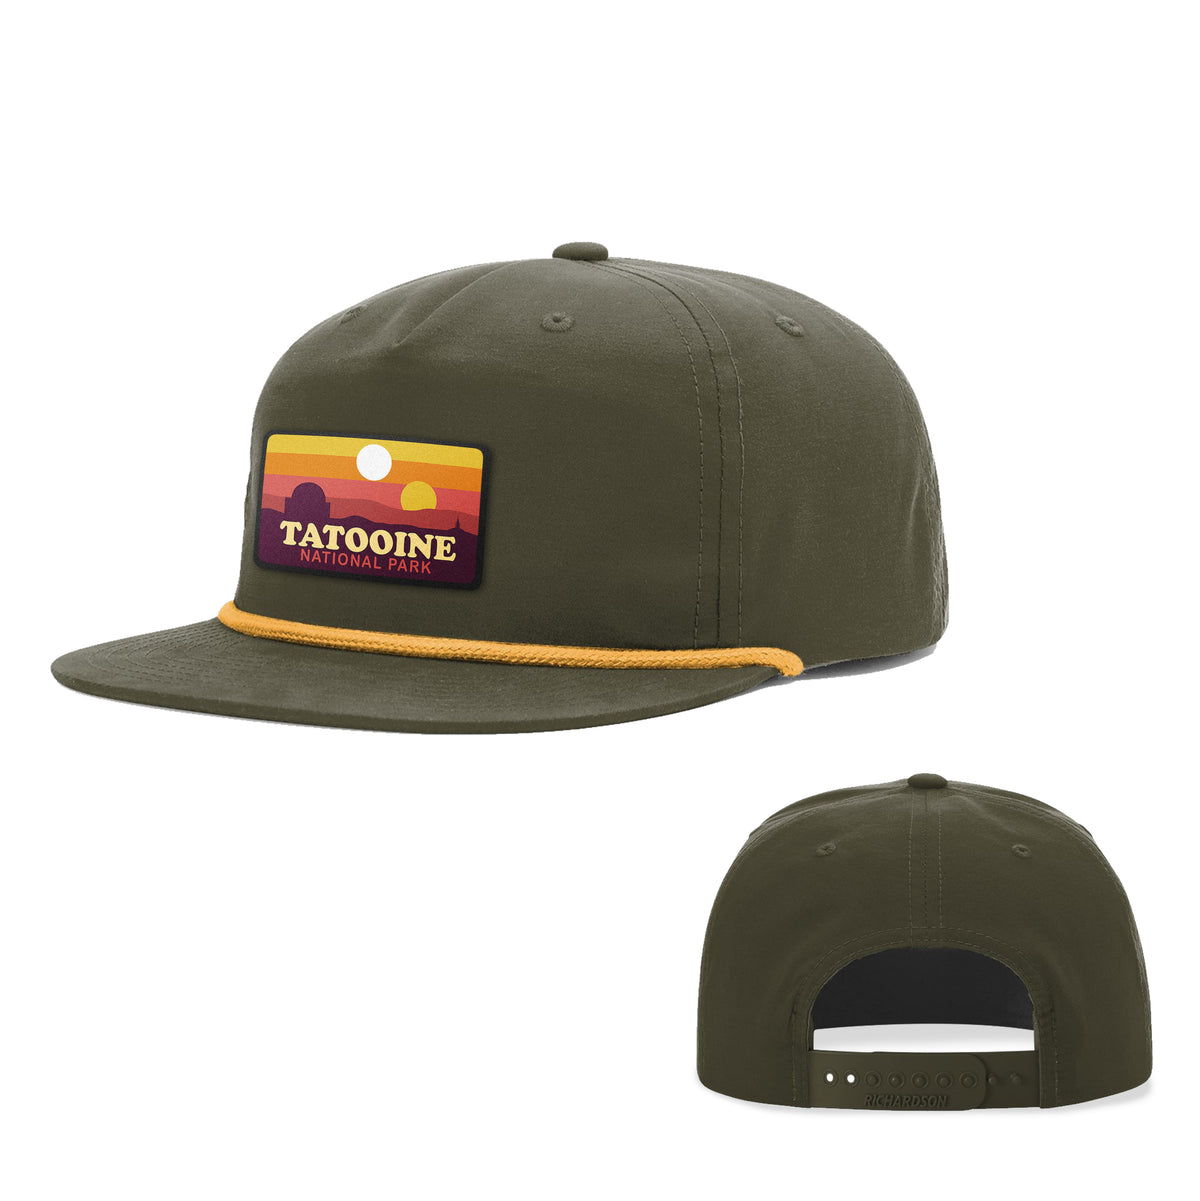 Tatooine National Park Rope Hats